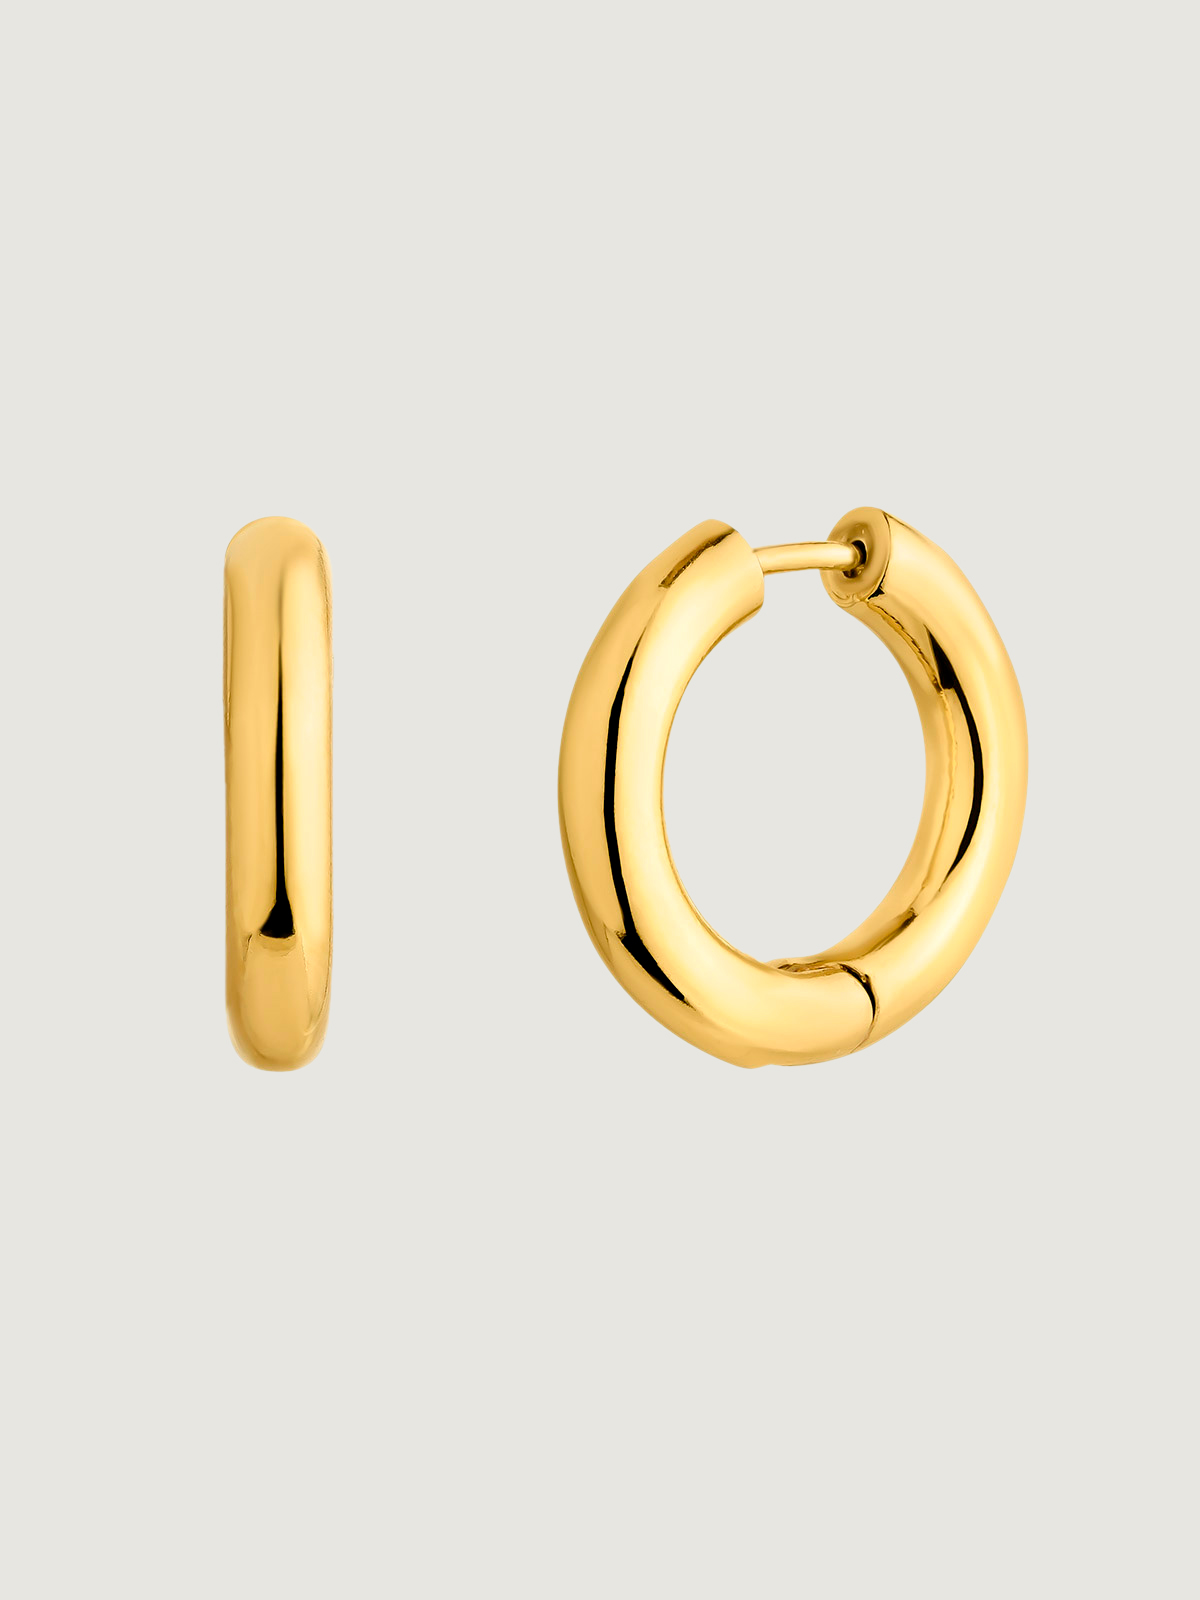 Medium hoop earrings made of 925 silver coated in 18K yellow gold